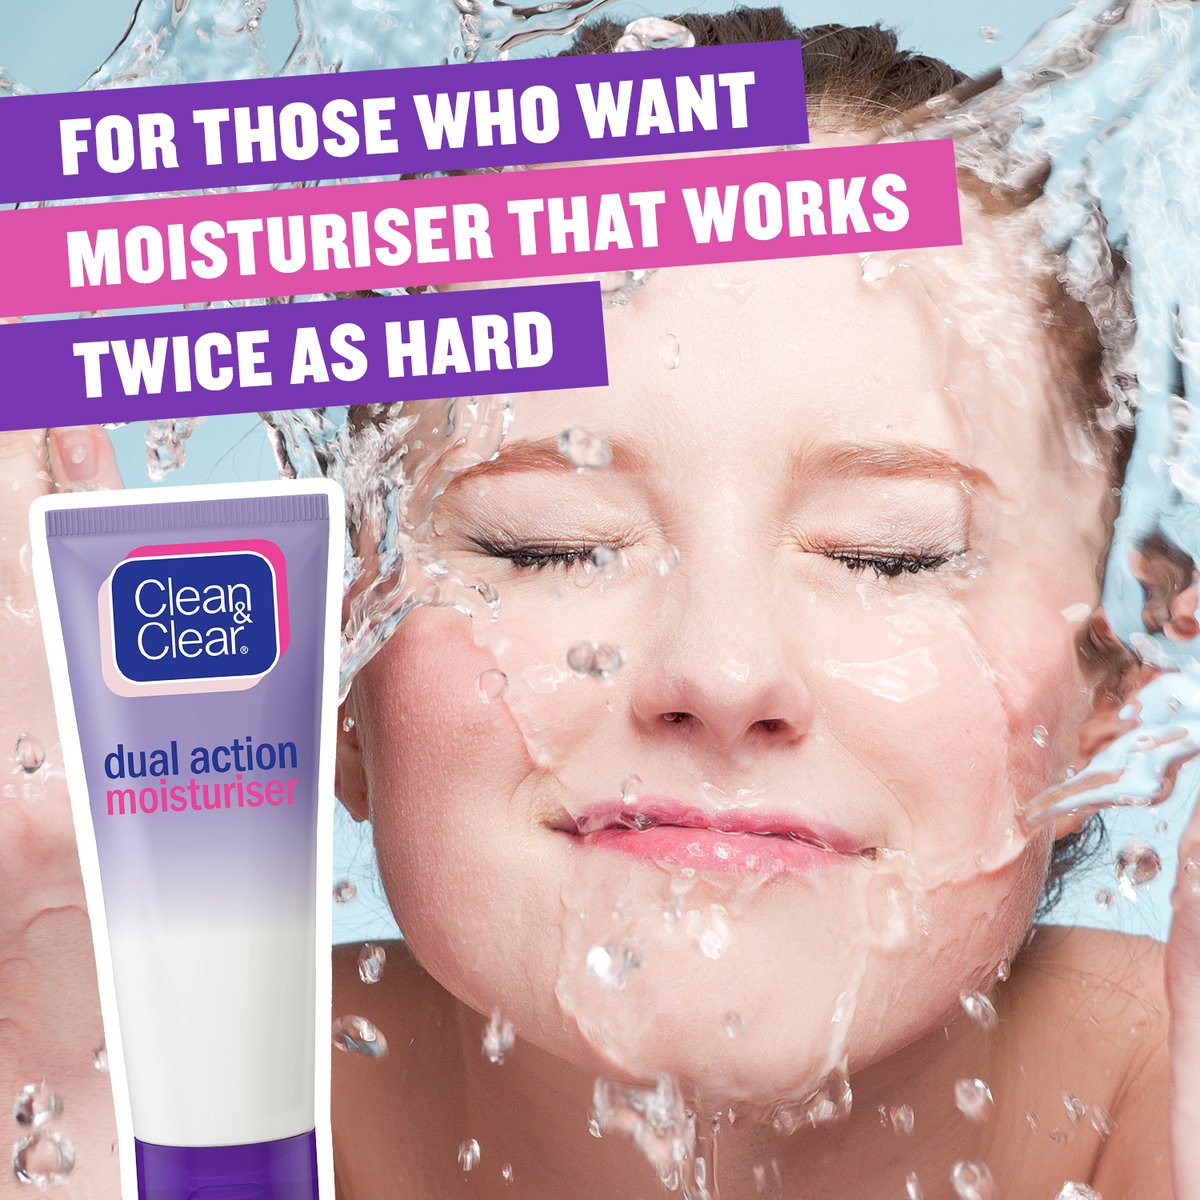 Clean & Clear ® dual action moisturizer